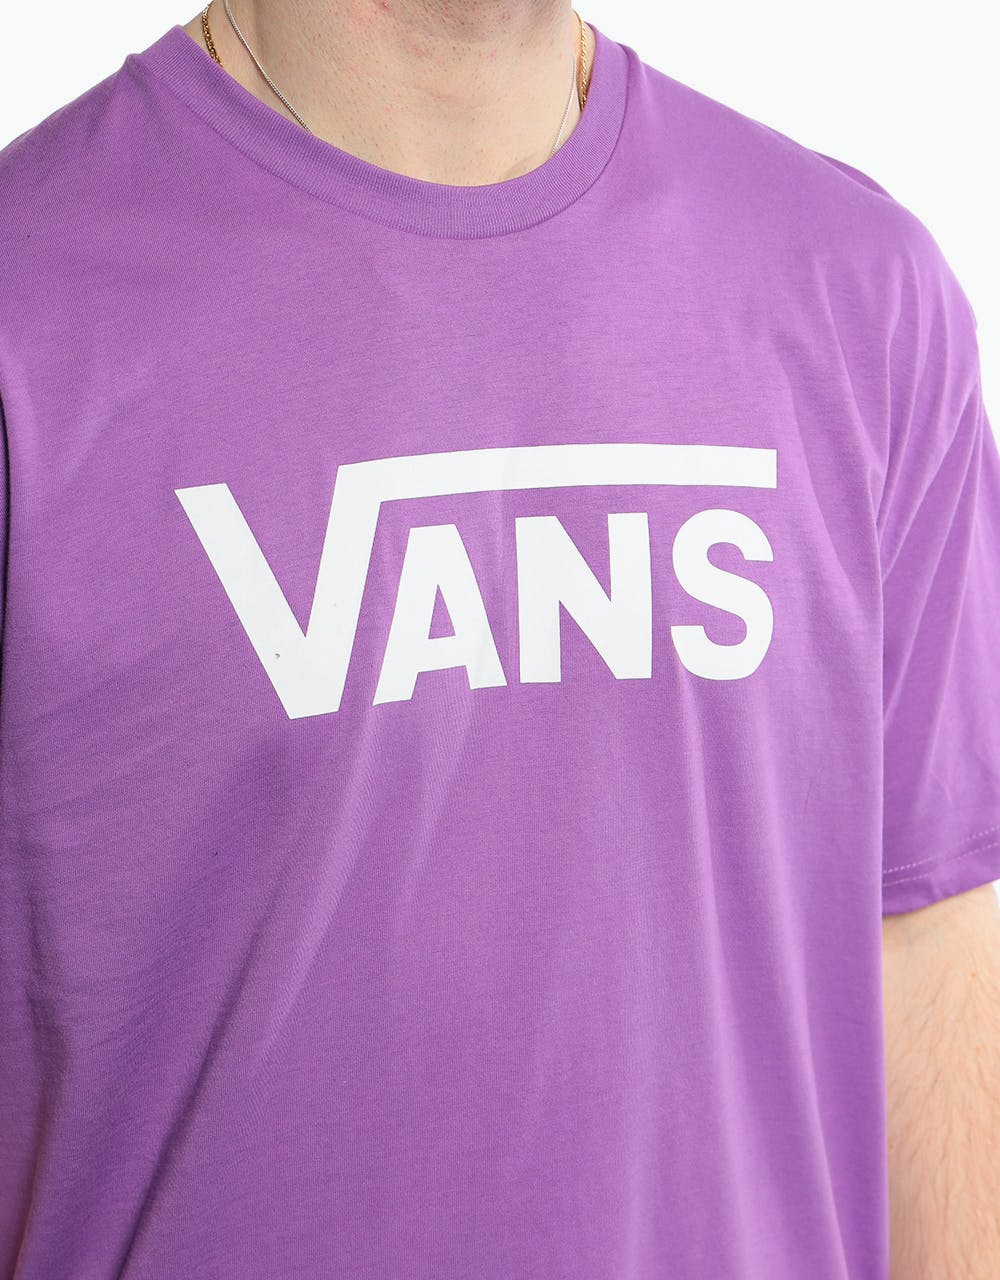 Vans Classic T-Shirt - Dewberry/White